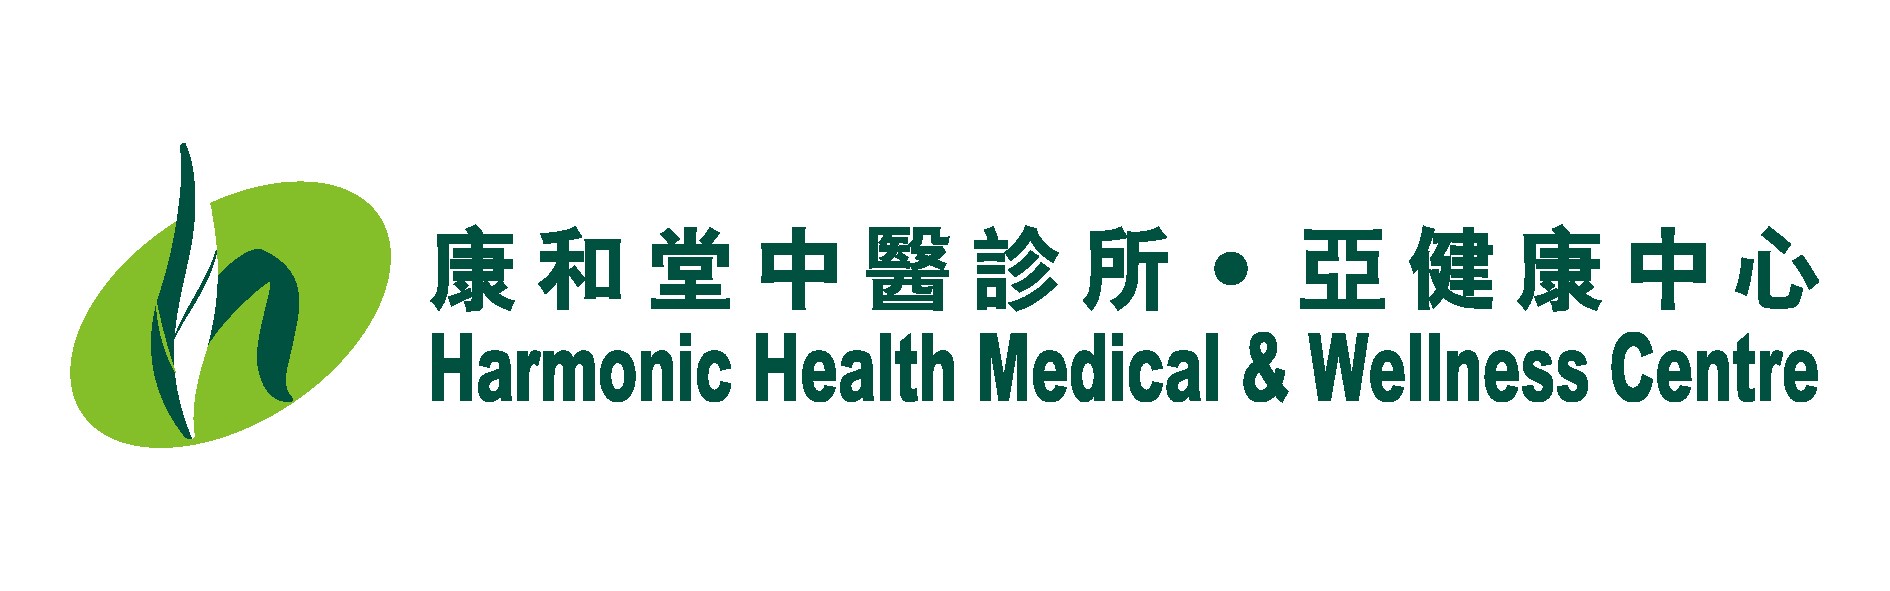 Harmonic Health Pharmaceutical Co Ltd 康和堂藥業有限公司 